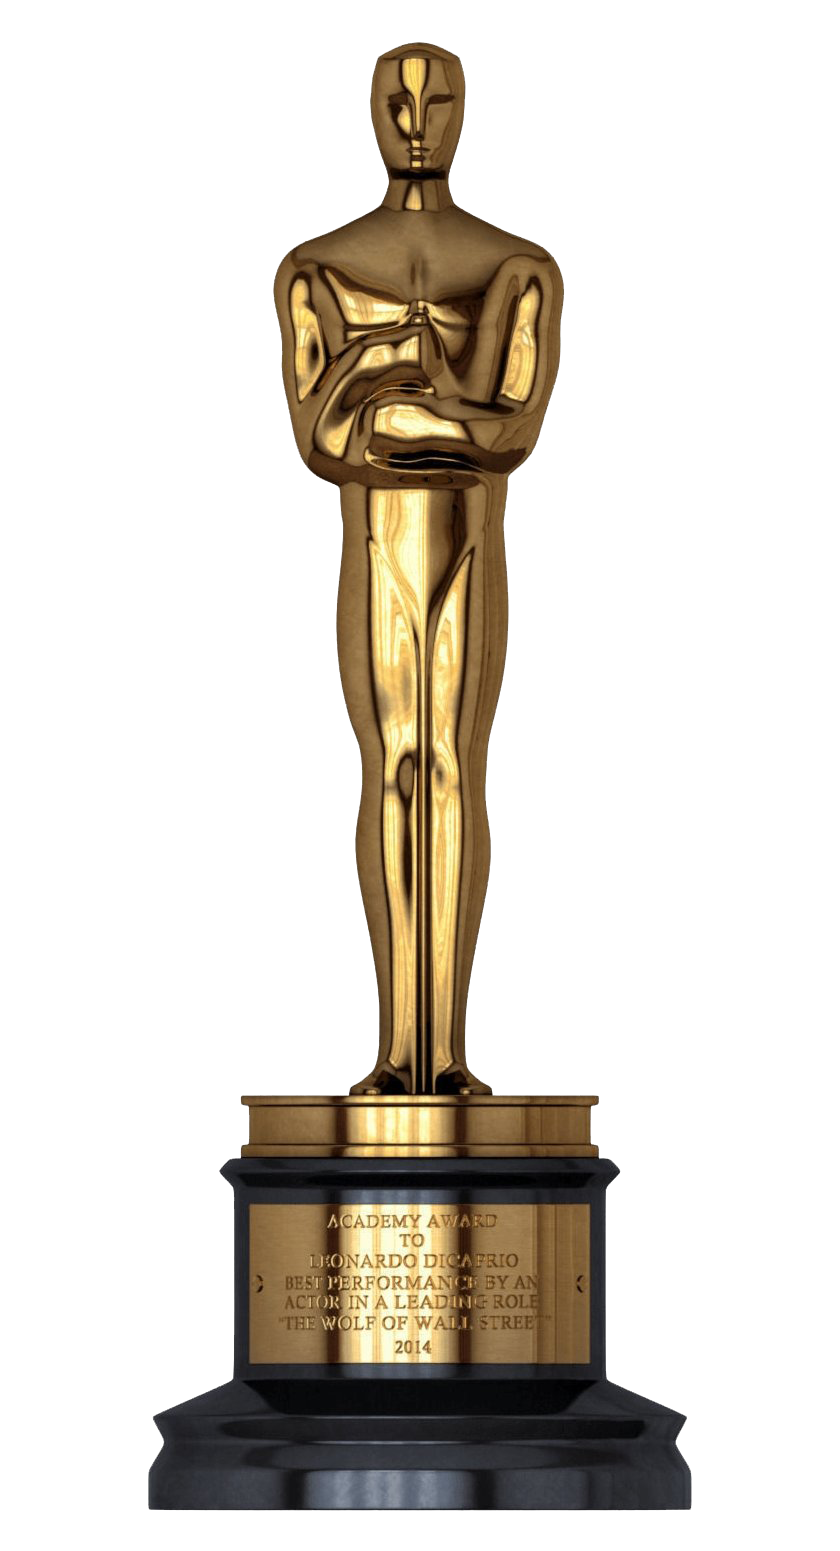 Academy Award Statue PNG Transparent Image